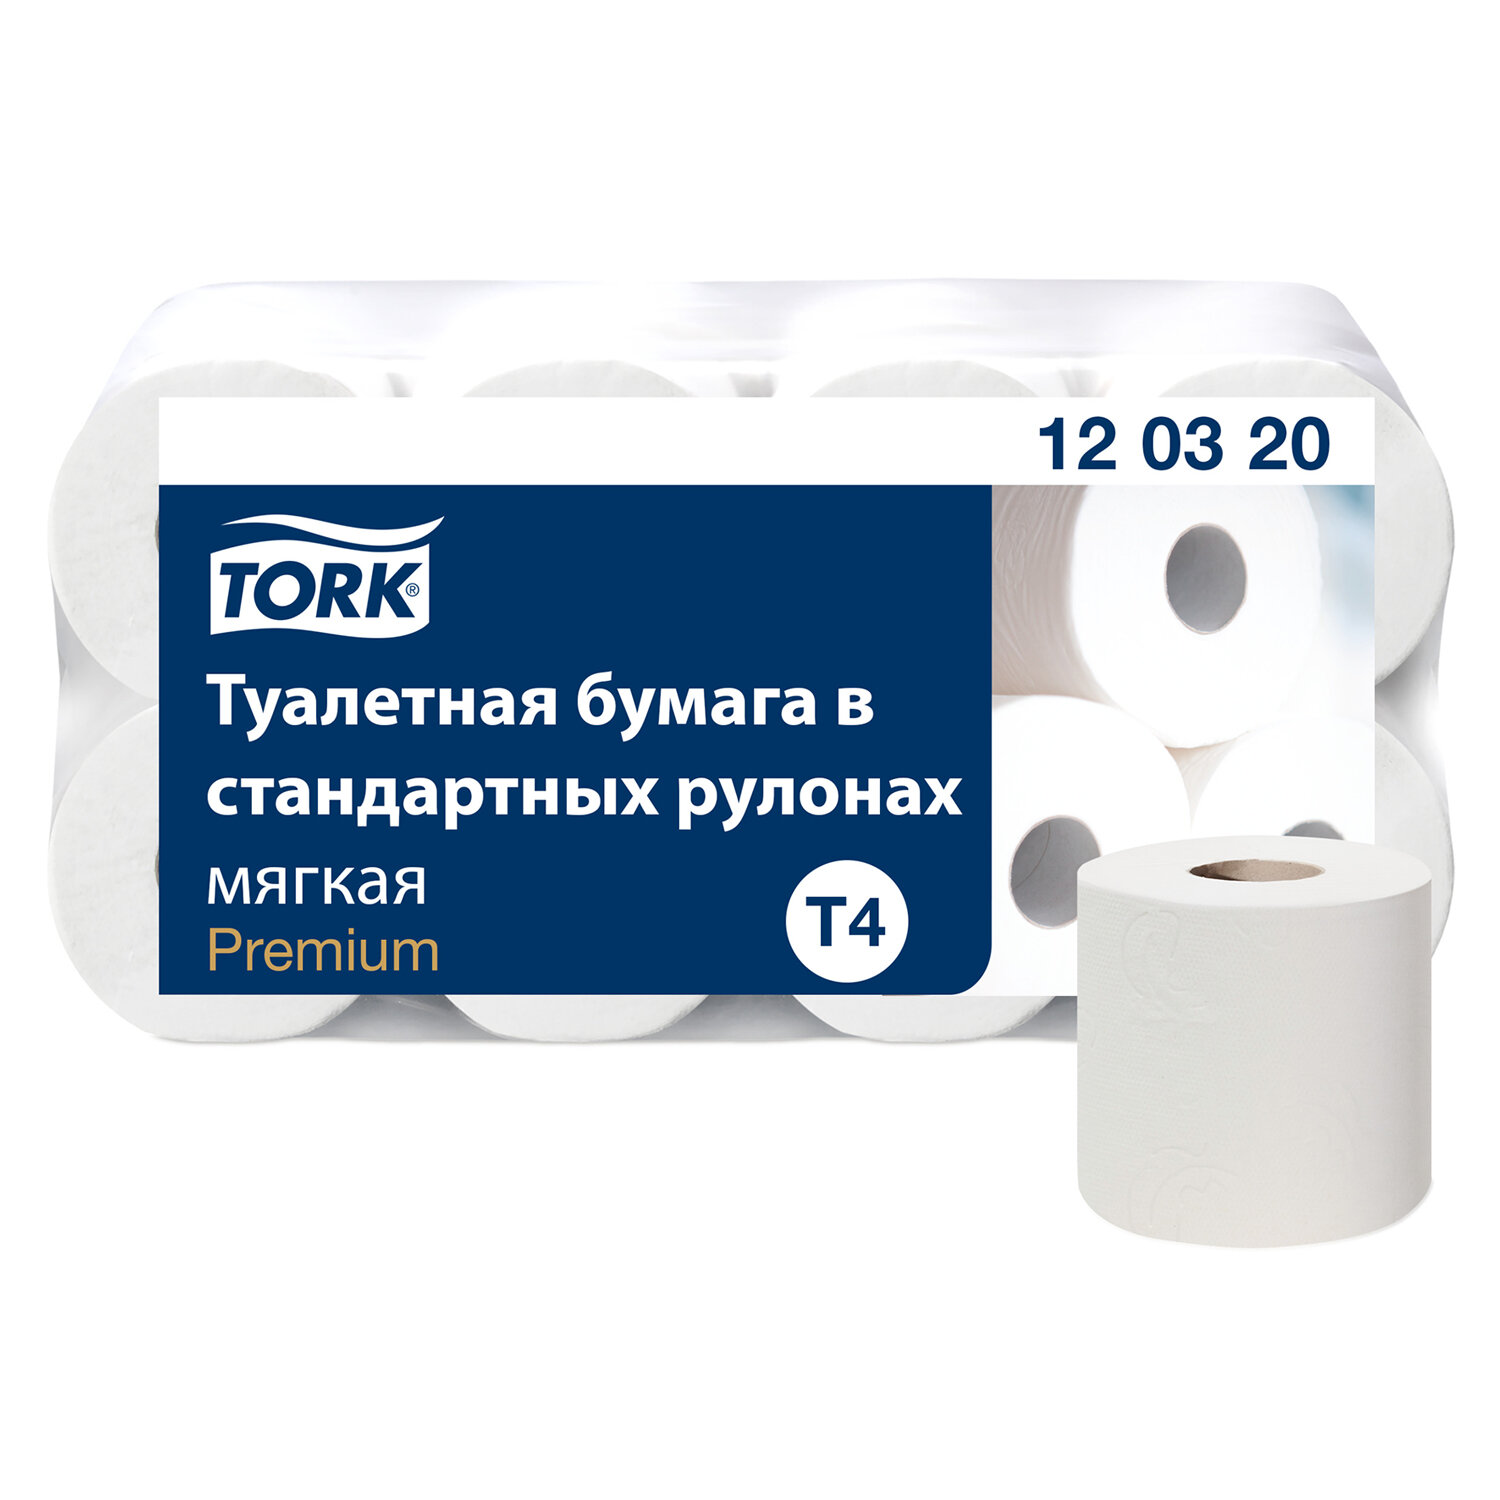 TORK Бумага TORK 120320, комплект 4 шт.